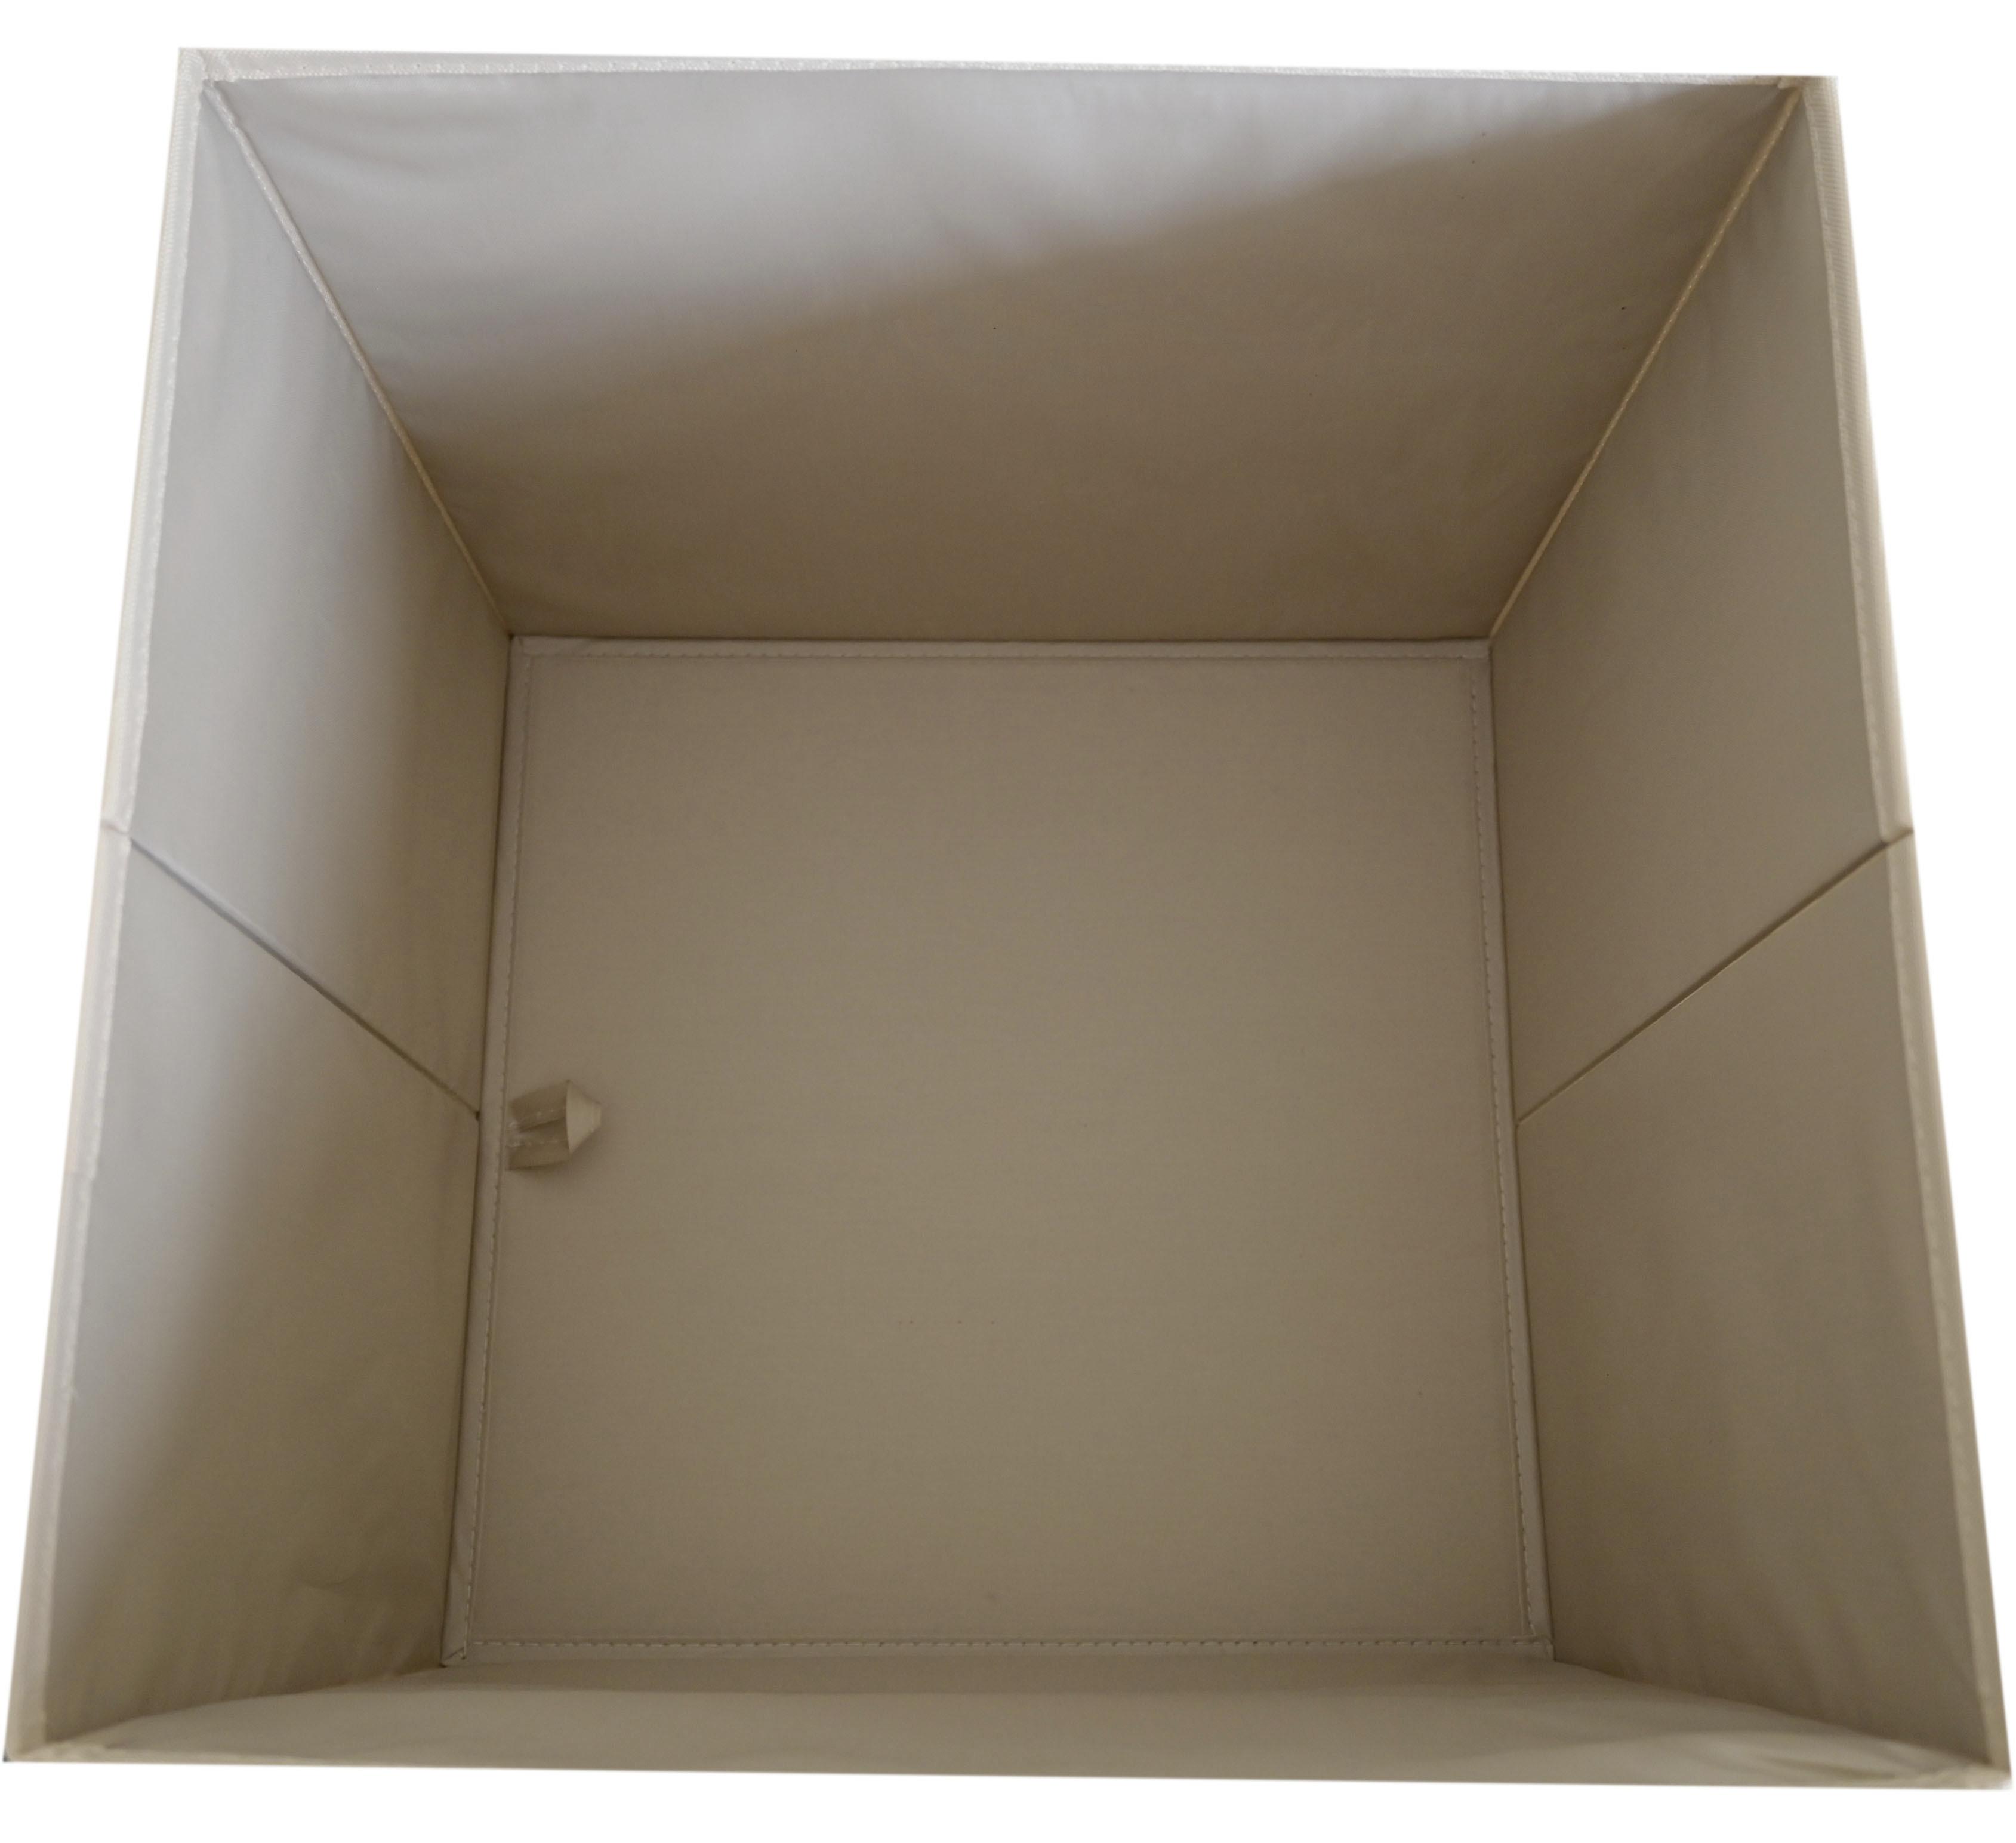 Skládací Krabice Peter - Ca. 34l -Ext- - krémová, karton/textil (33/32/33cm) - Modern Living